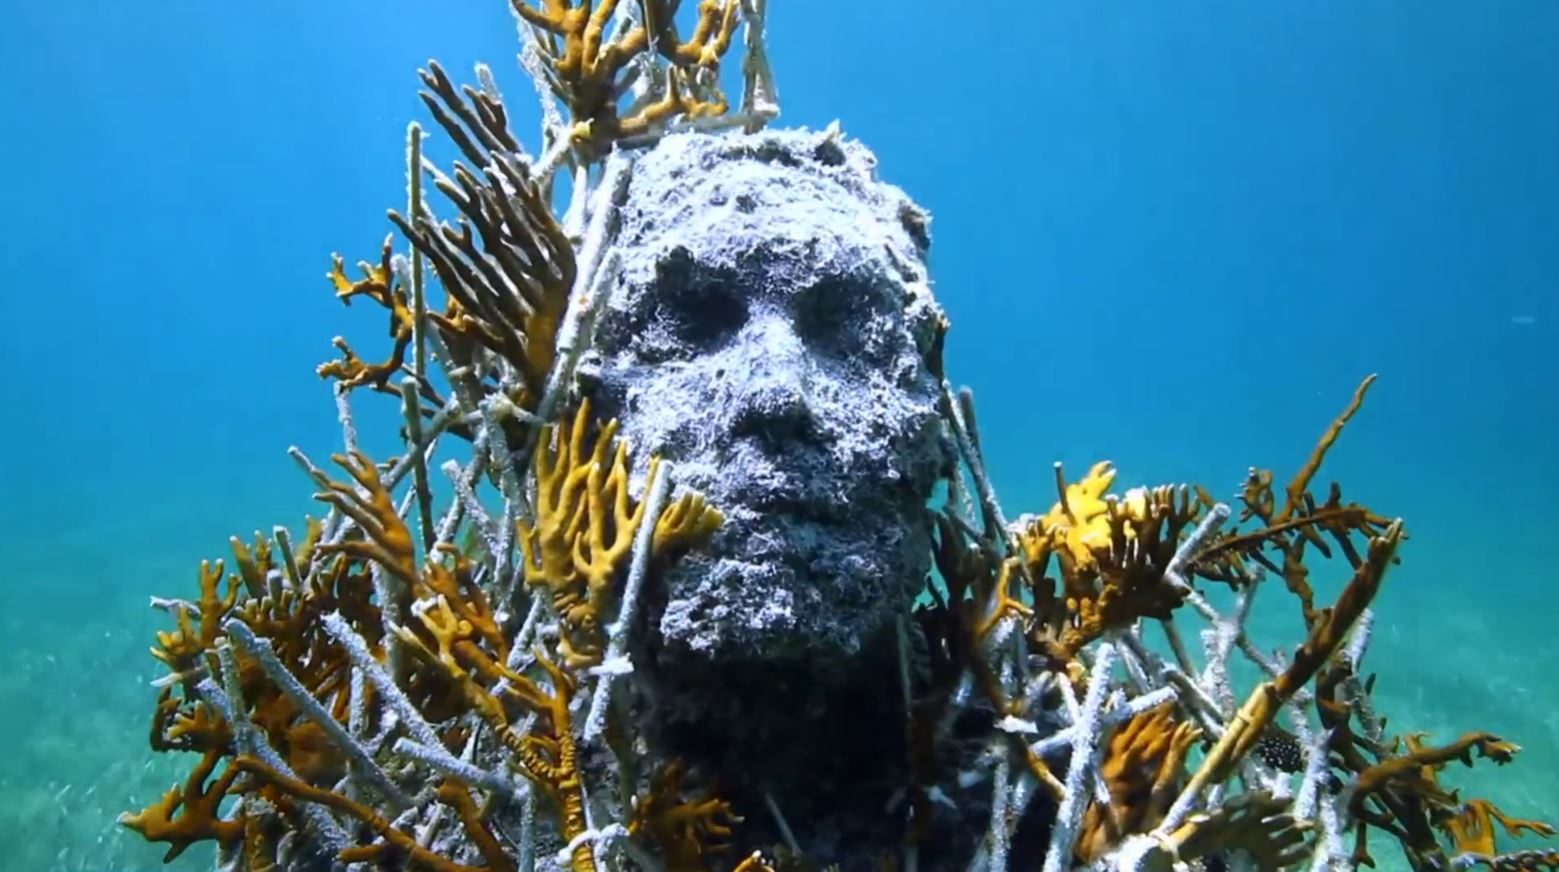 Underwater sculptures highlight threat of sewage pollution  Channel 4 News [Video]